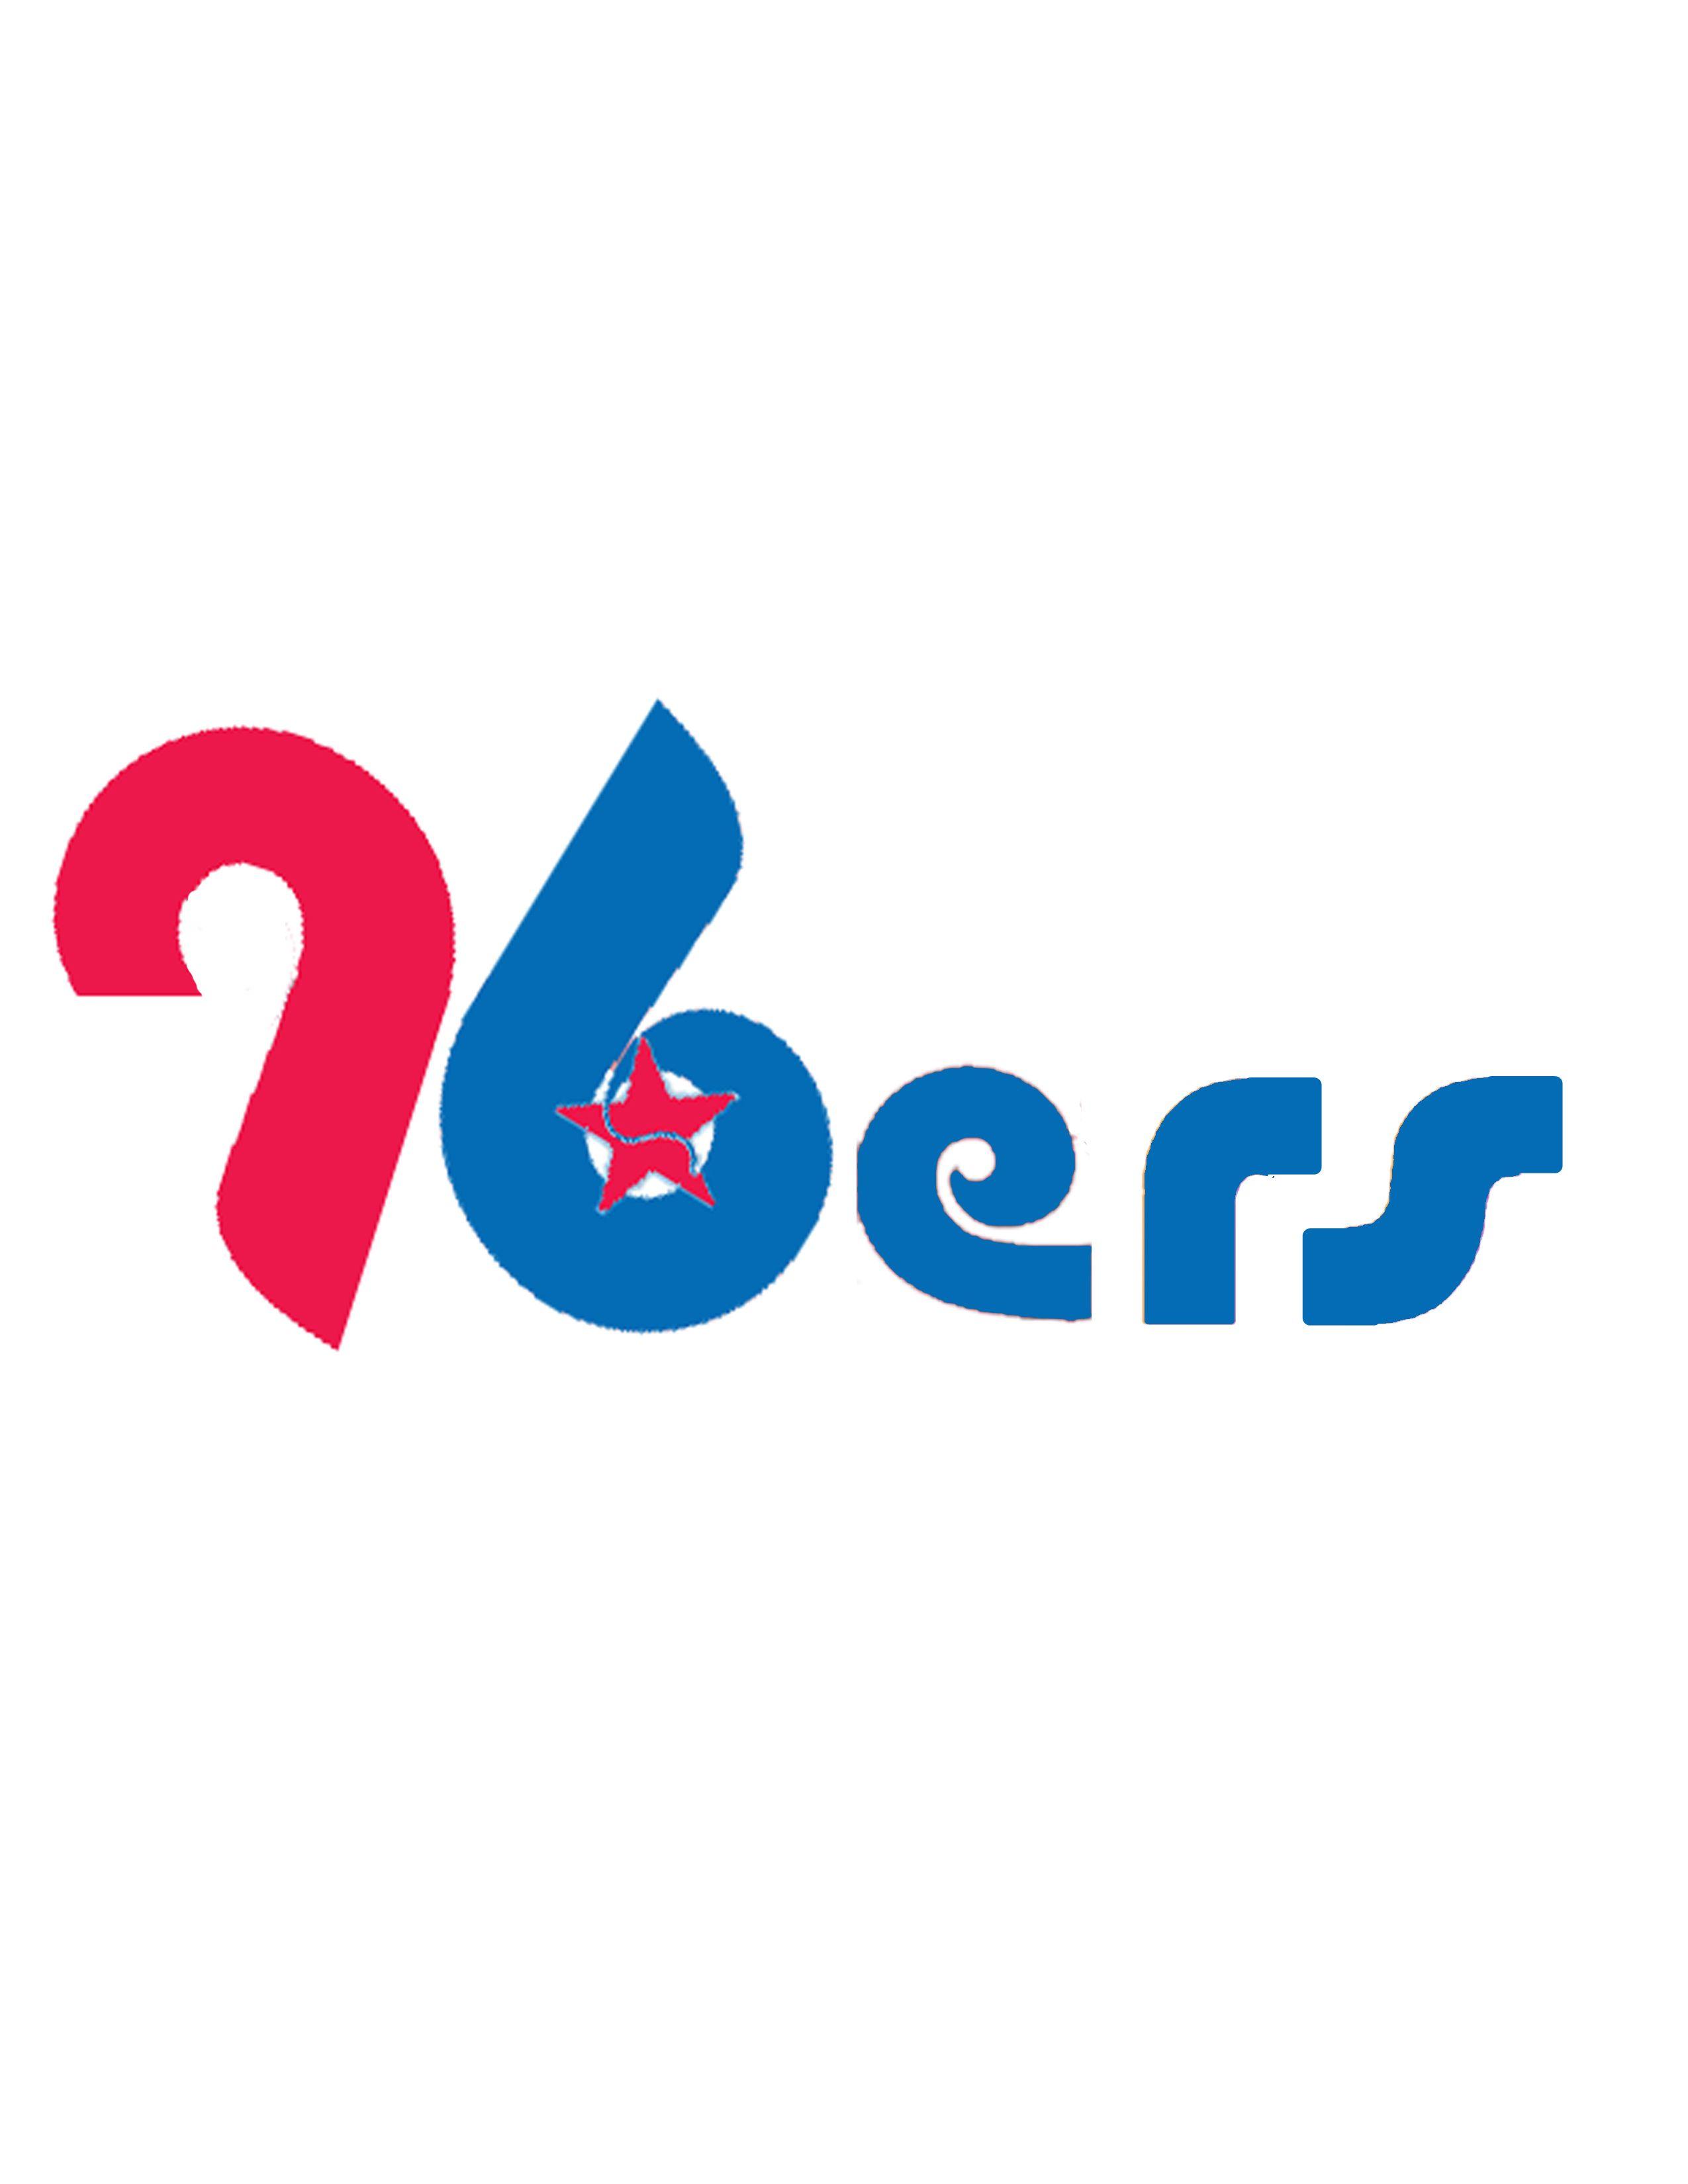 Sixers Logo - Philadelphia 76ers Logo Mashups - Page 7